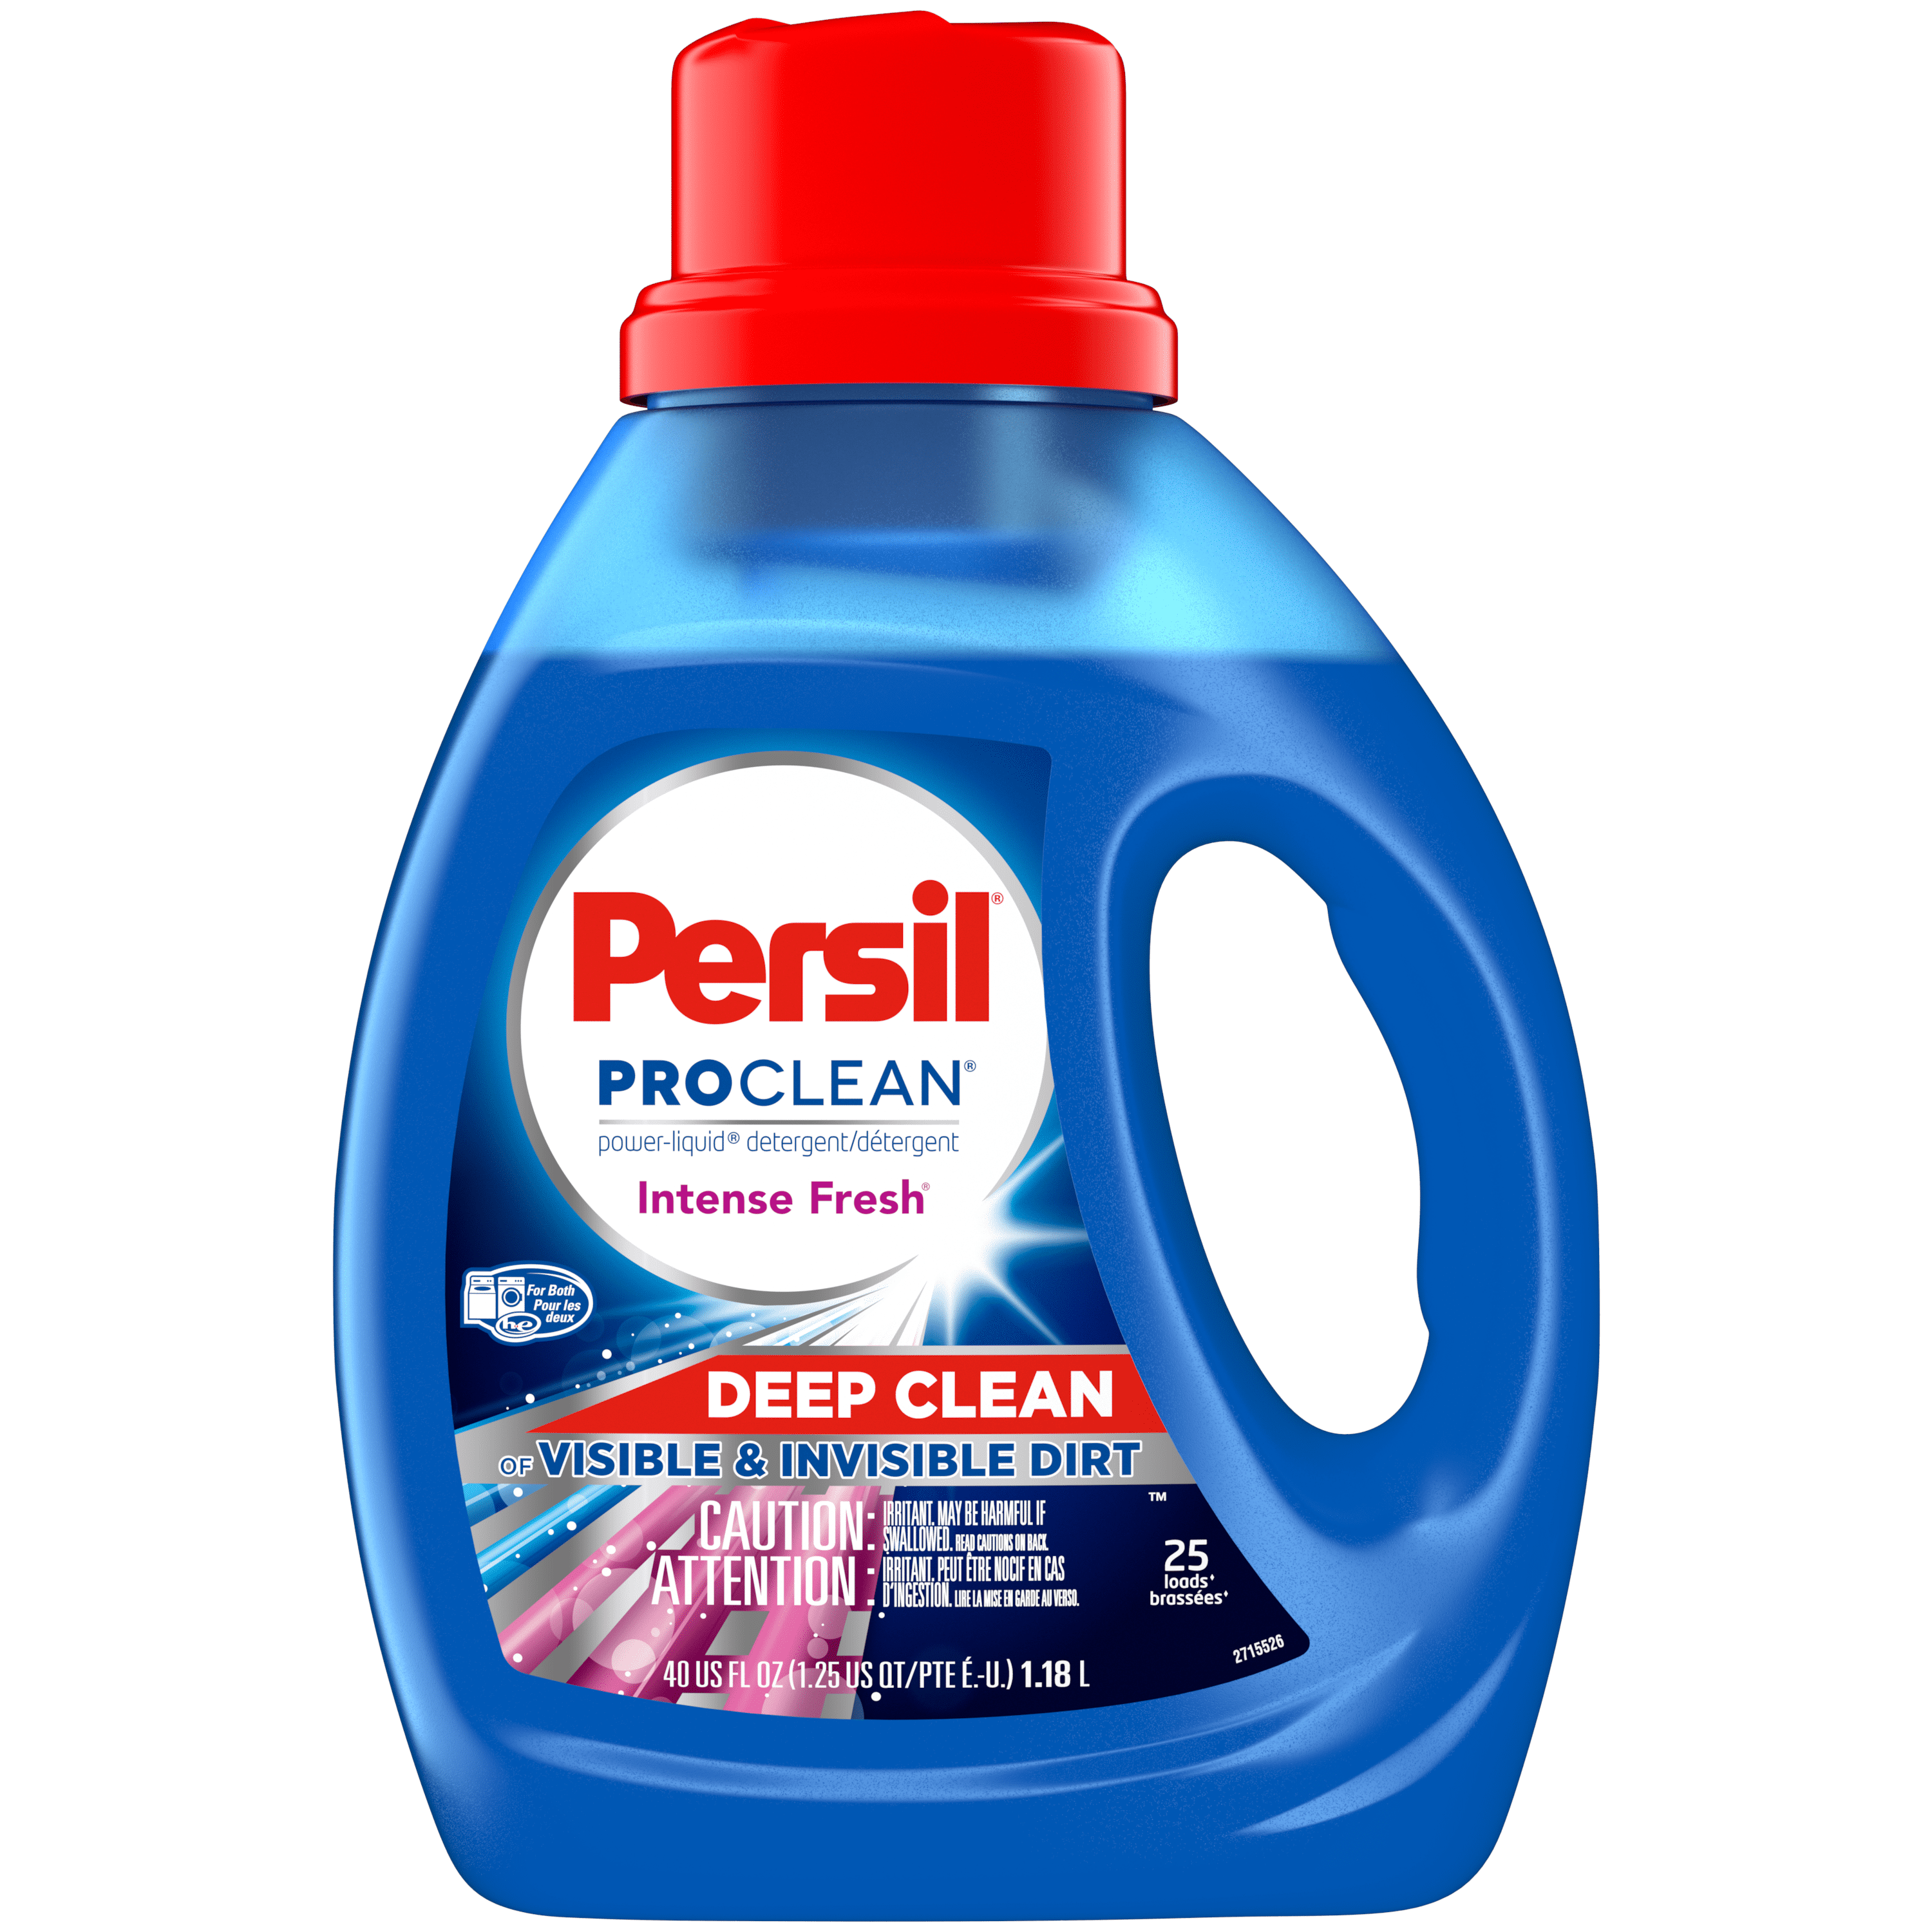 Persil PROCLEAN. Persil Laundry. Persil Deep clean logo. Persil PROCLEAN Turkish.